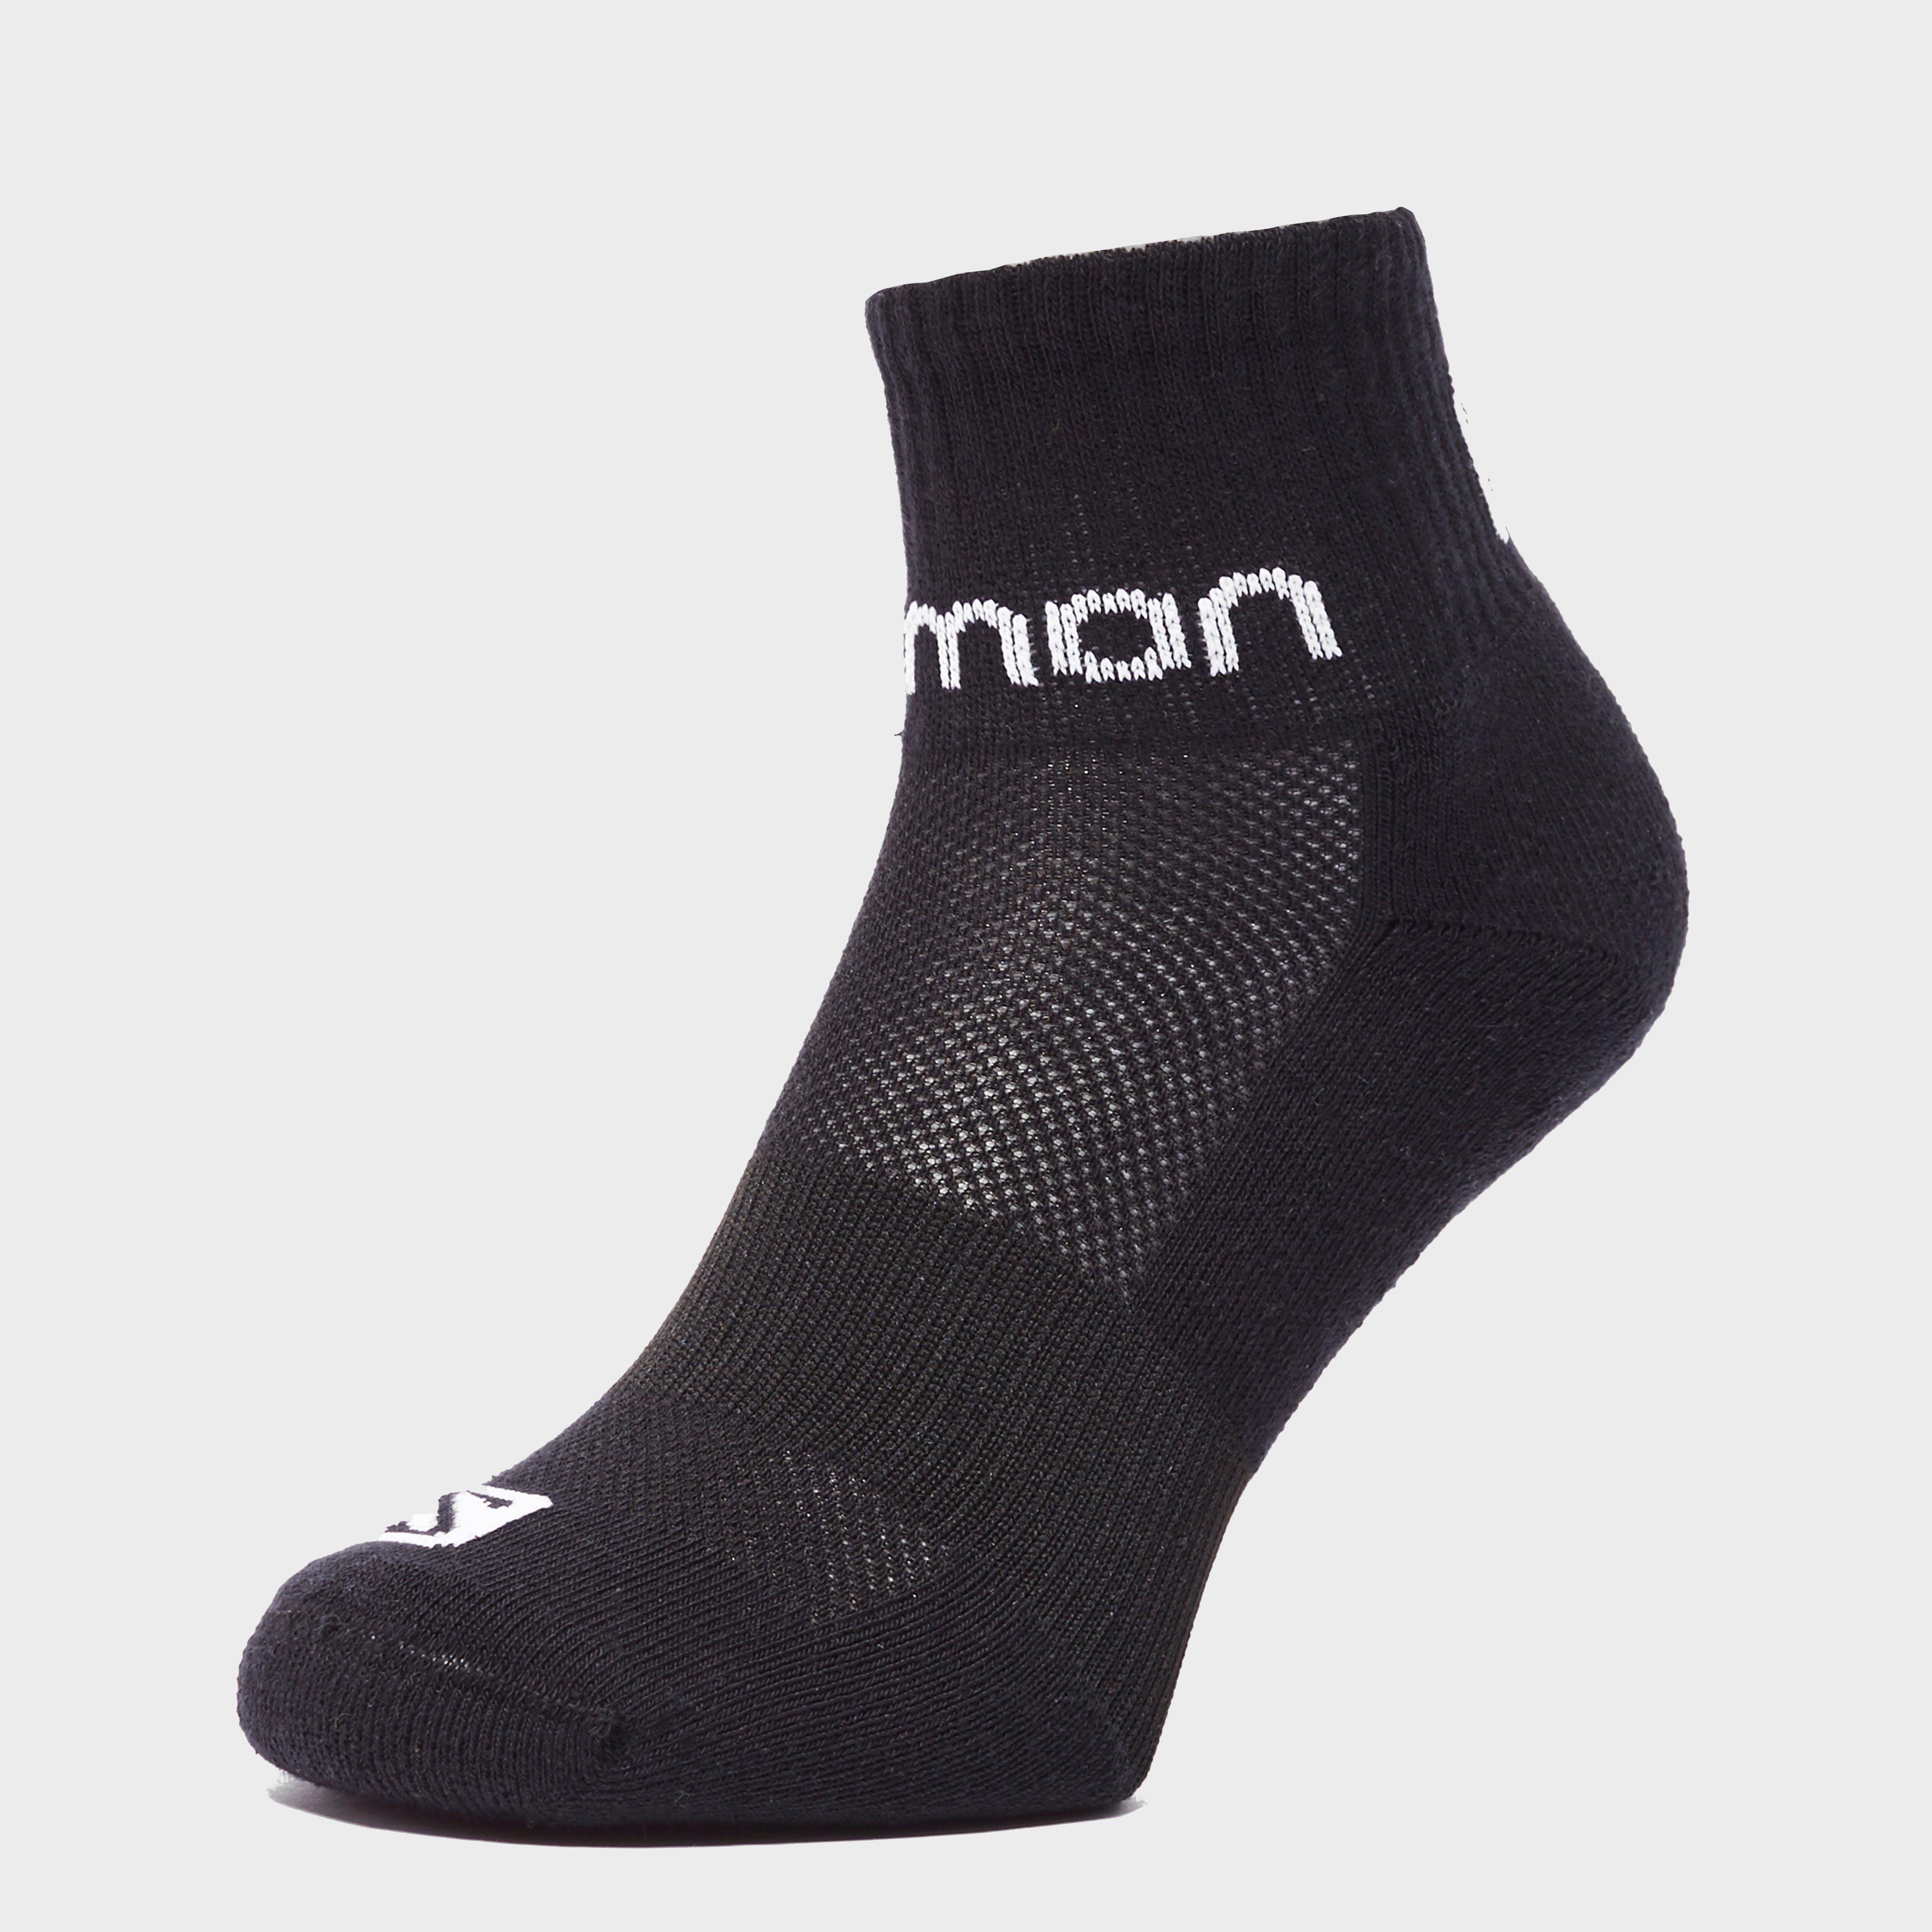 Salomon Evasion 2-pack Socks - Black/blk  Black/blk